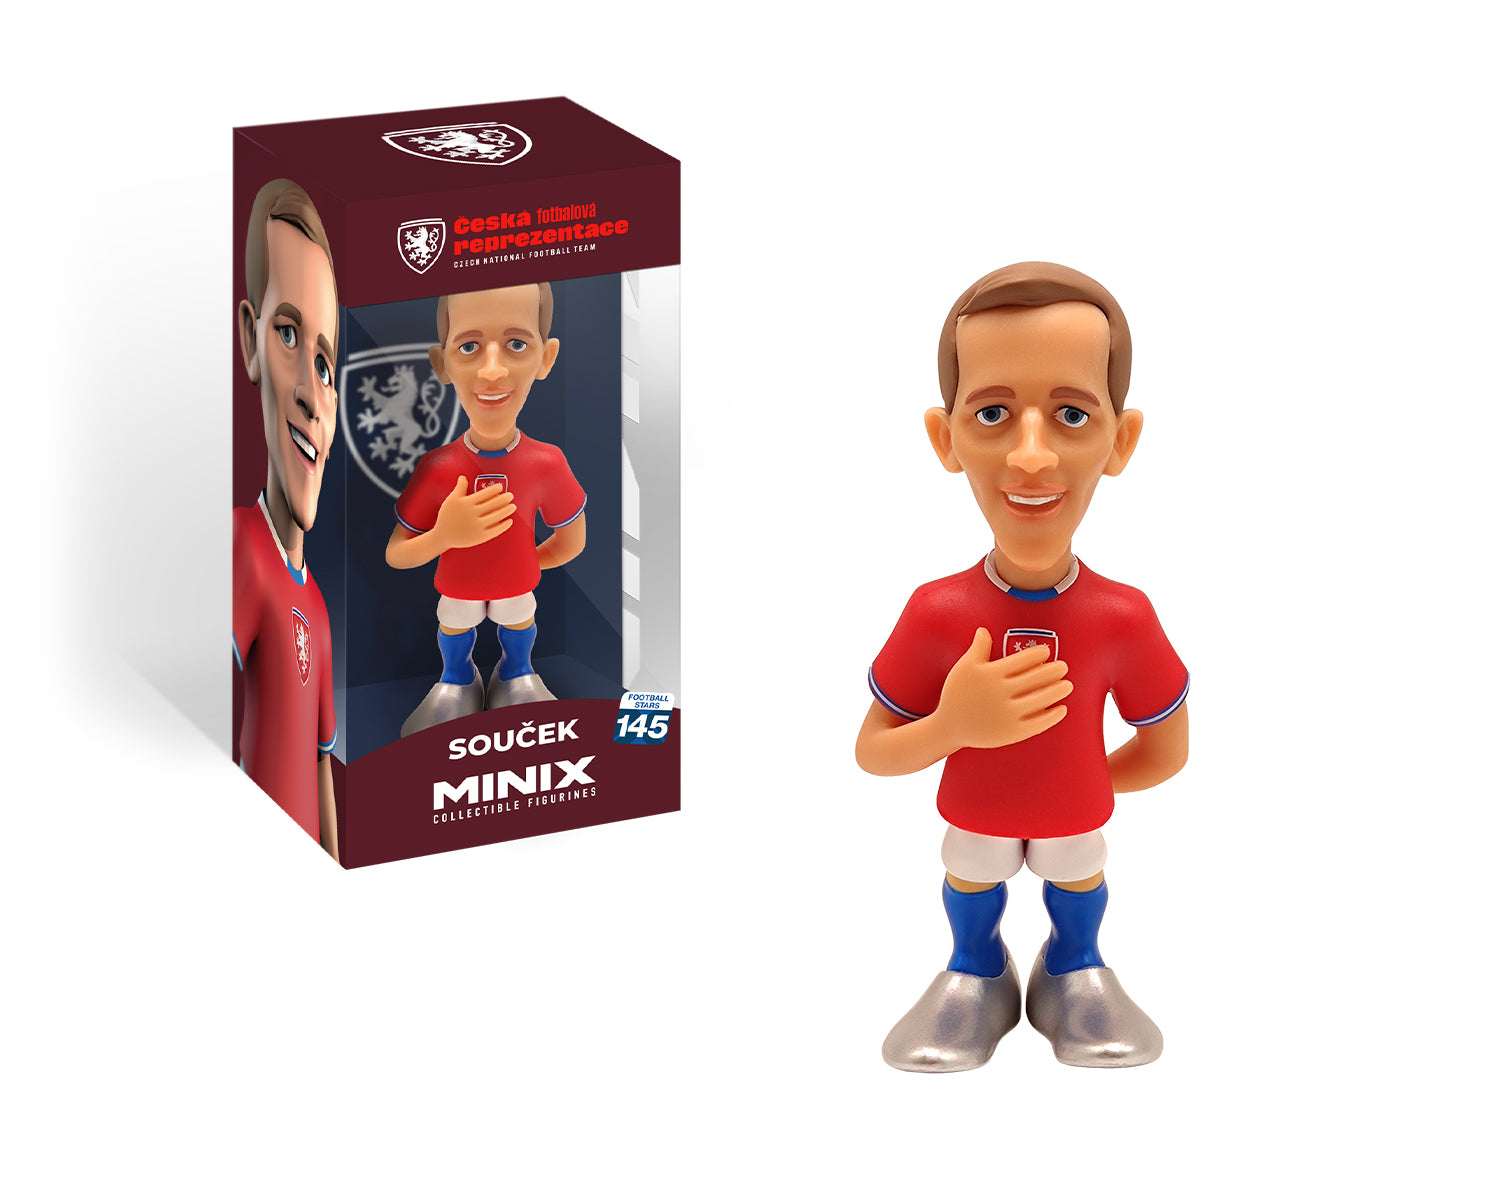 Minix -Football -CZ -SOUCEK -Figurine -12 cm